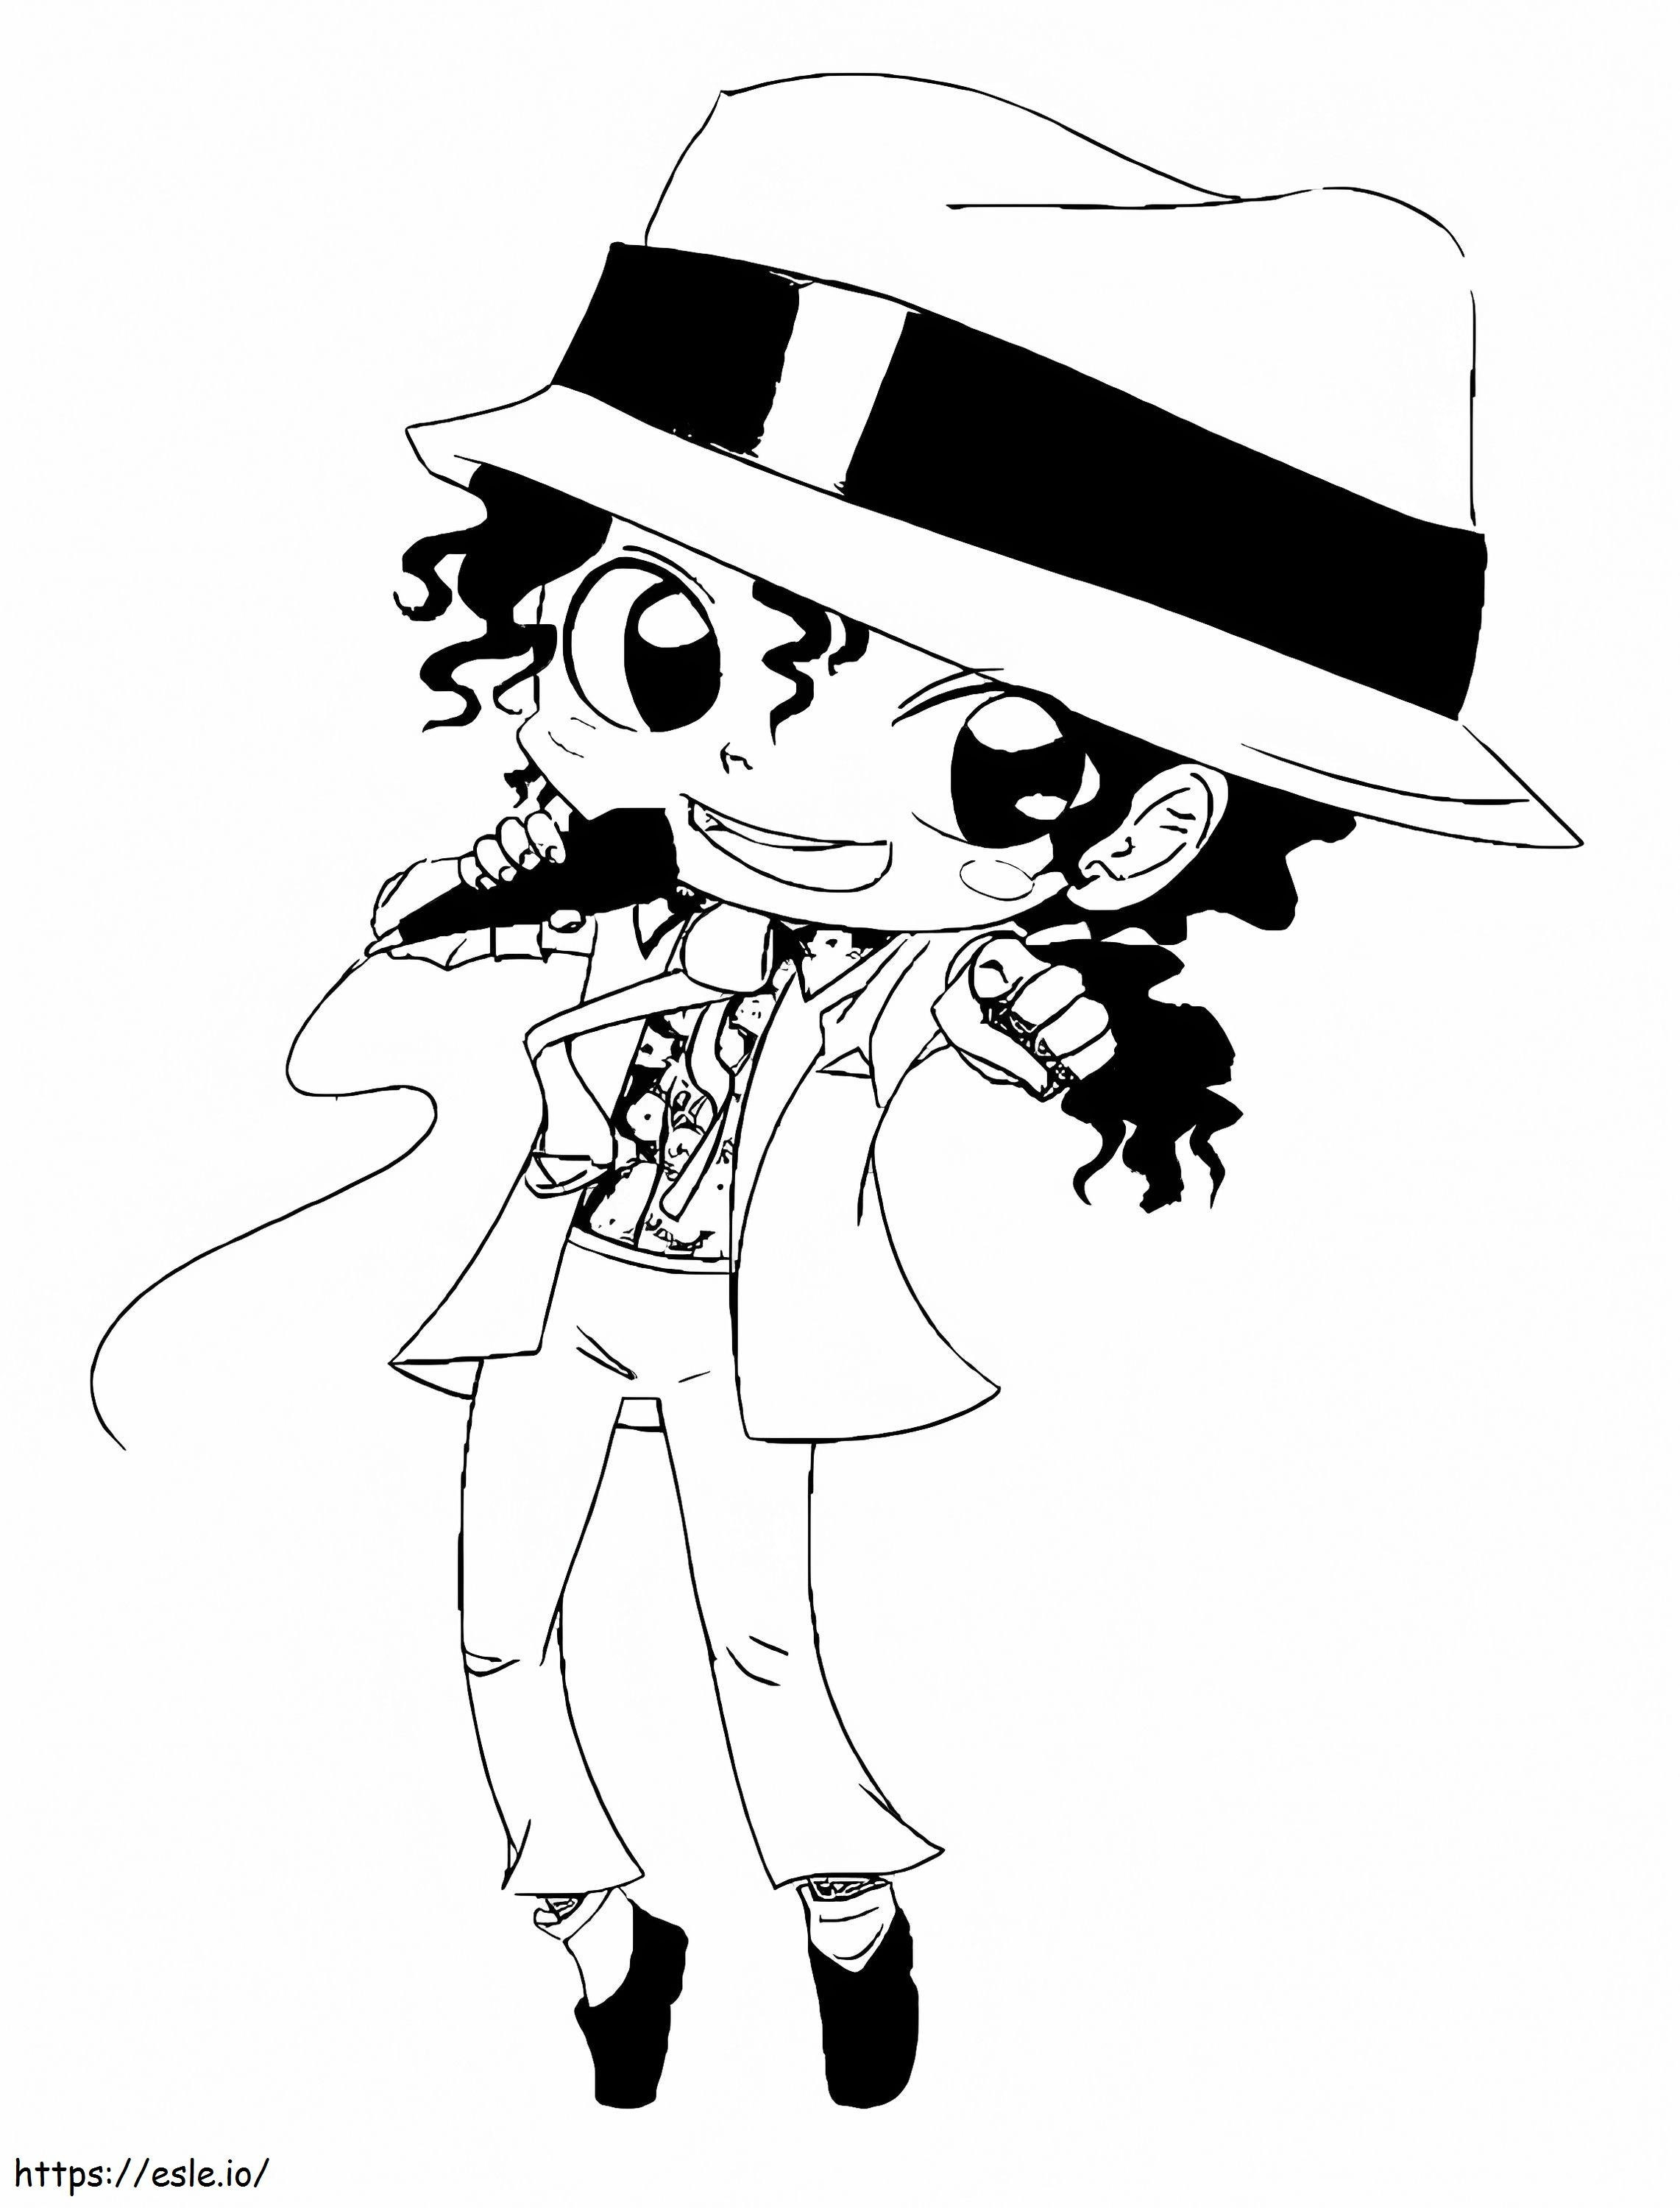 Chibi Michael Jackson Cute coloring page